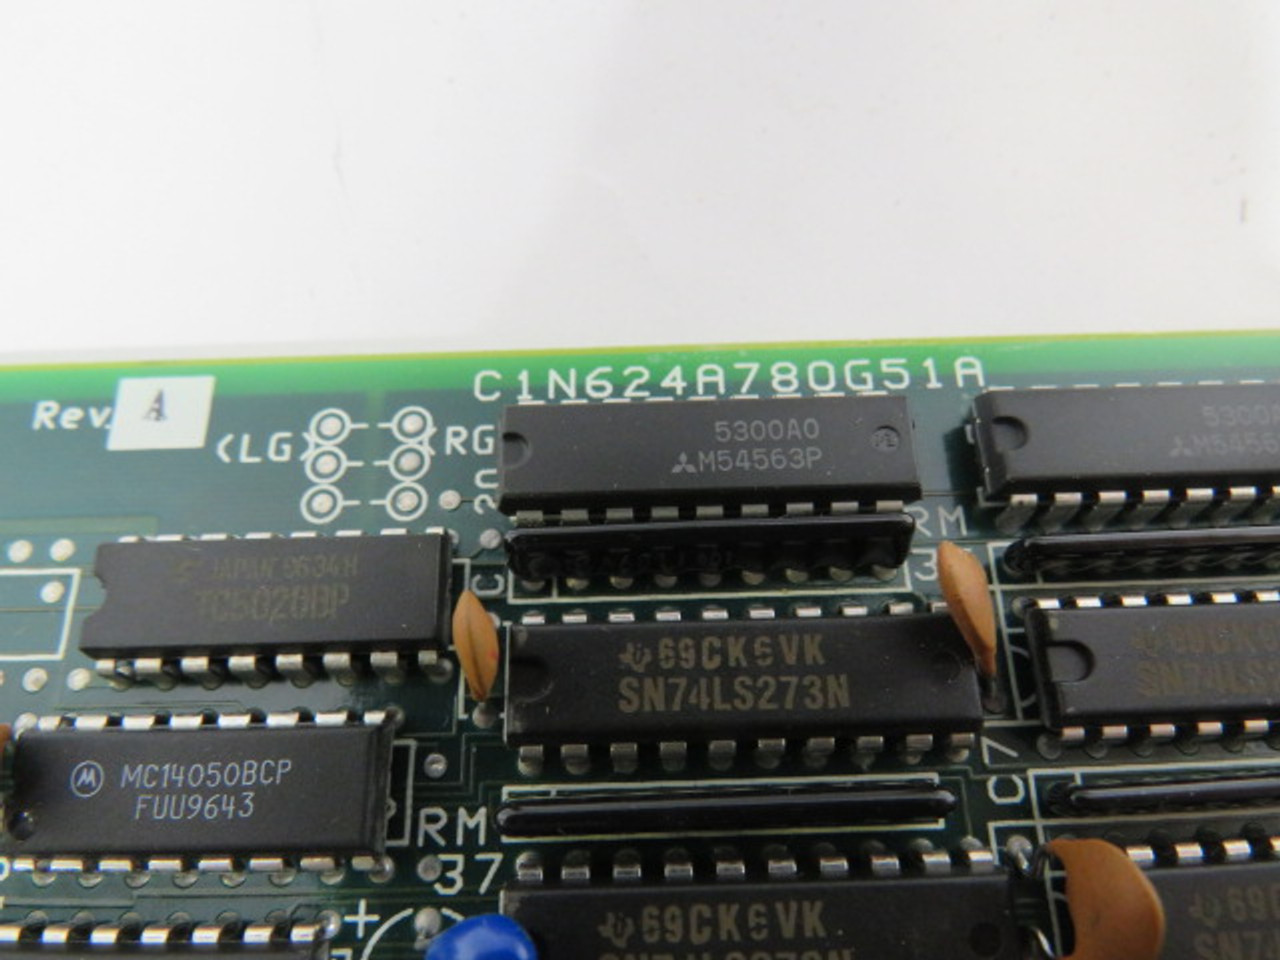 Mitsubishi C1N624A780G51A Rev. A Circuit Board USED